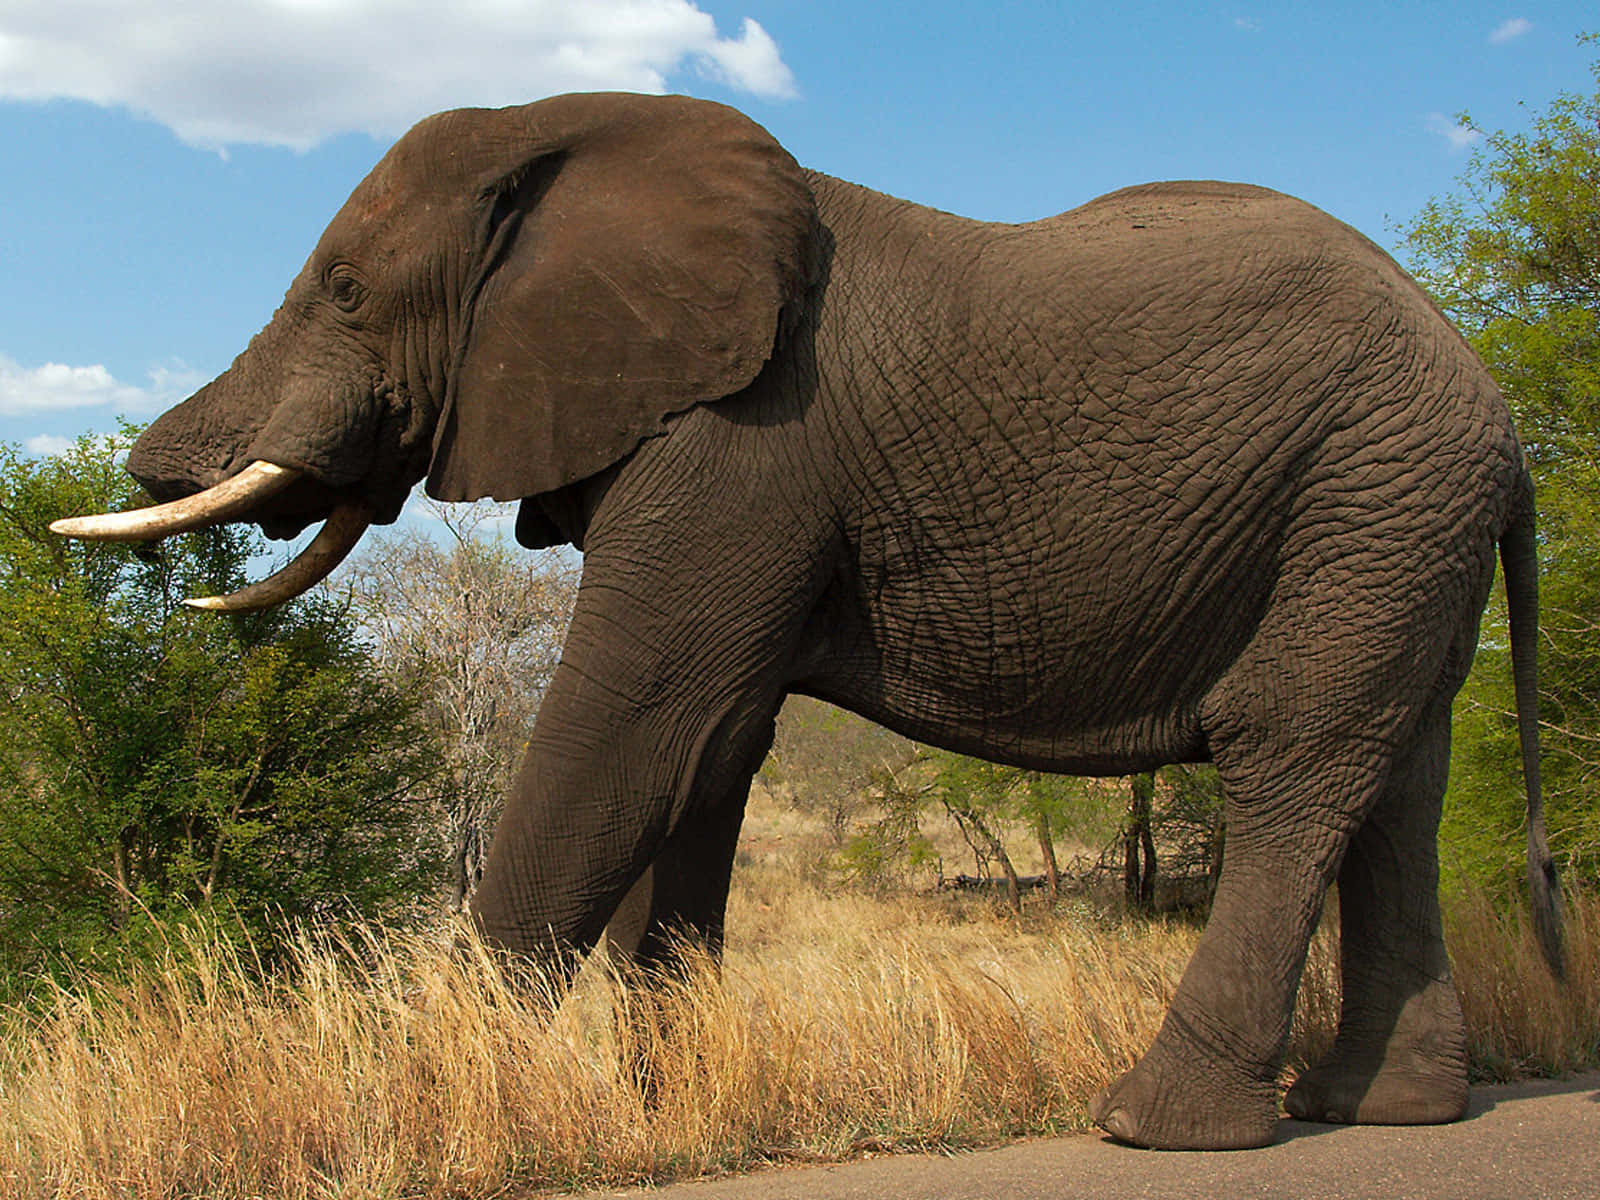 Majestic Elephant in its Natural Habitat.